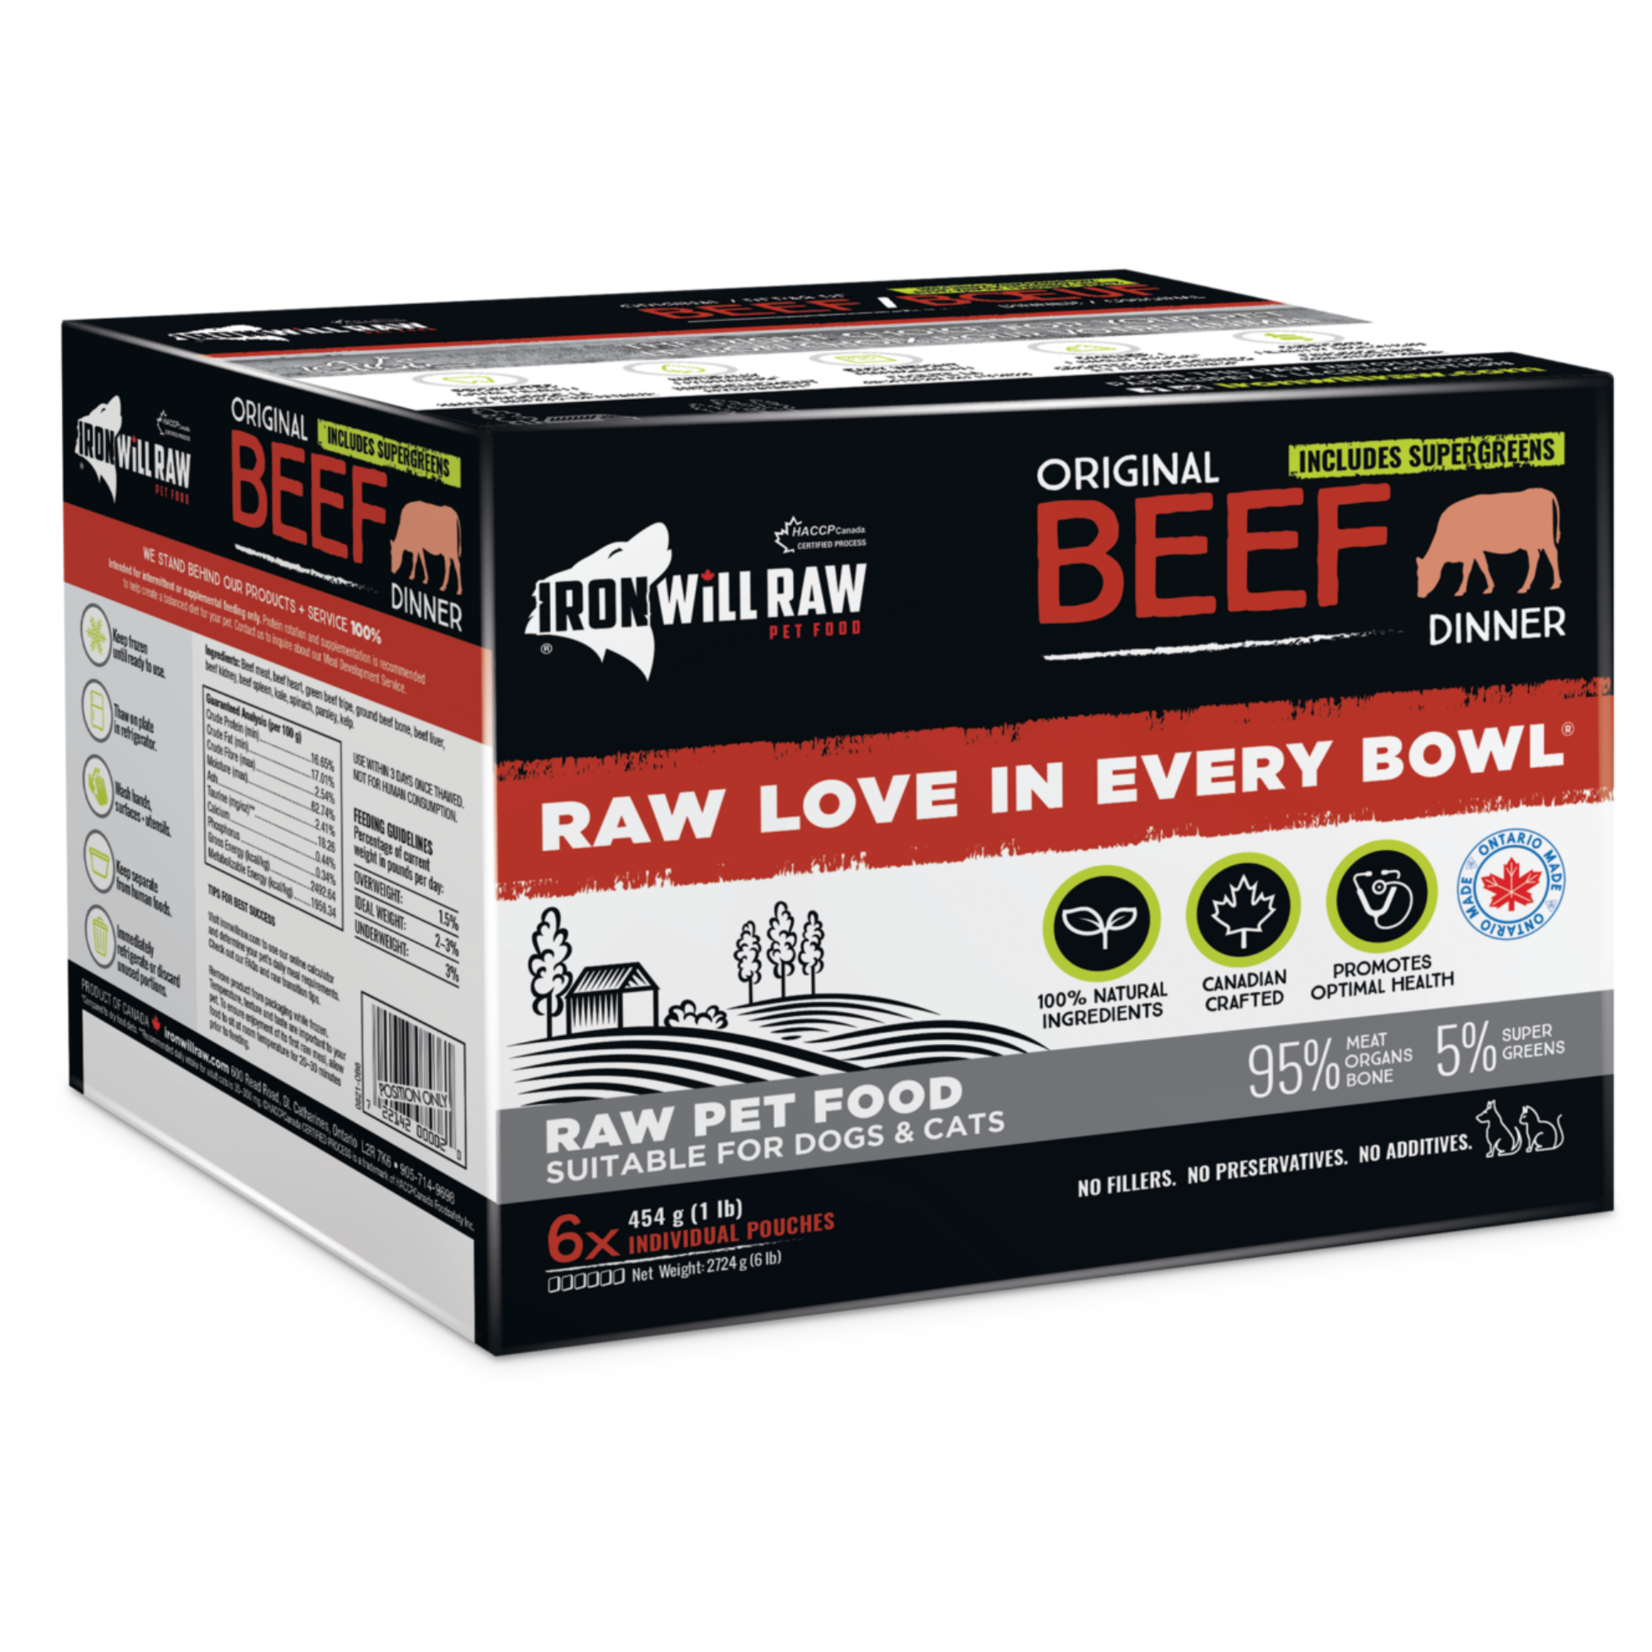 Iron Will Raw Iron Will Raw: Original Dinner: Beef  6lb